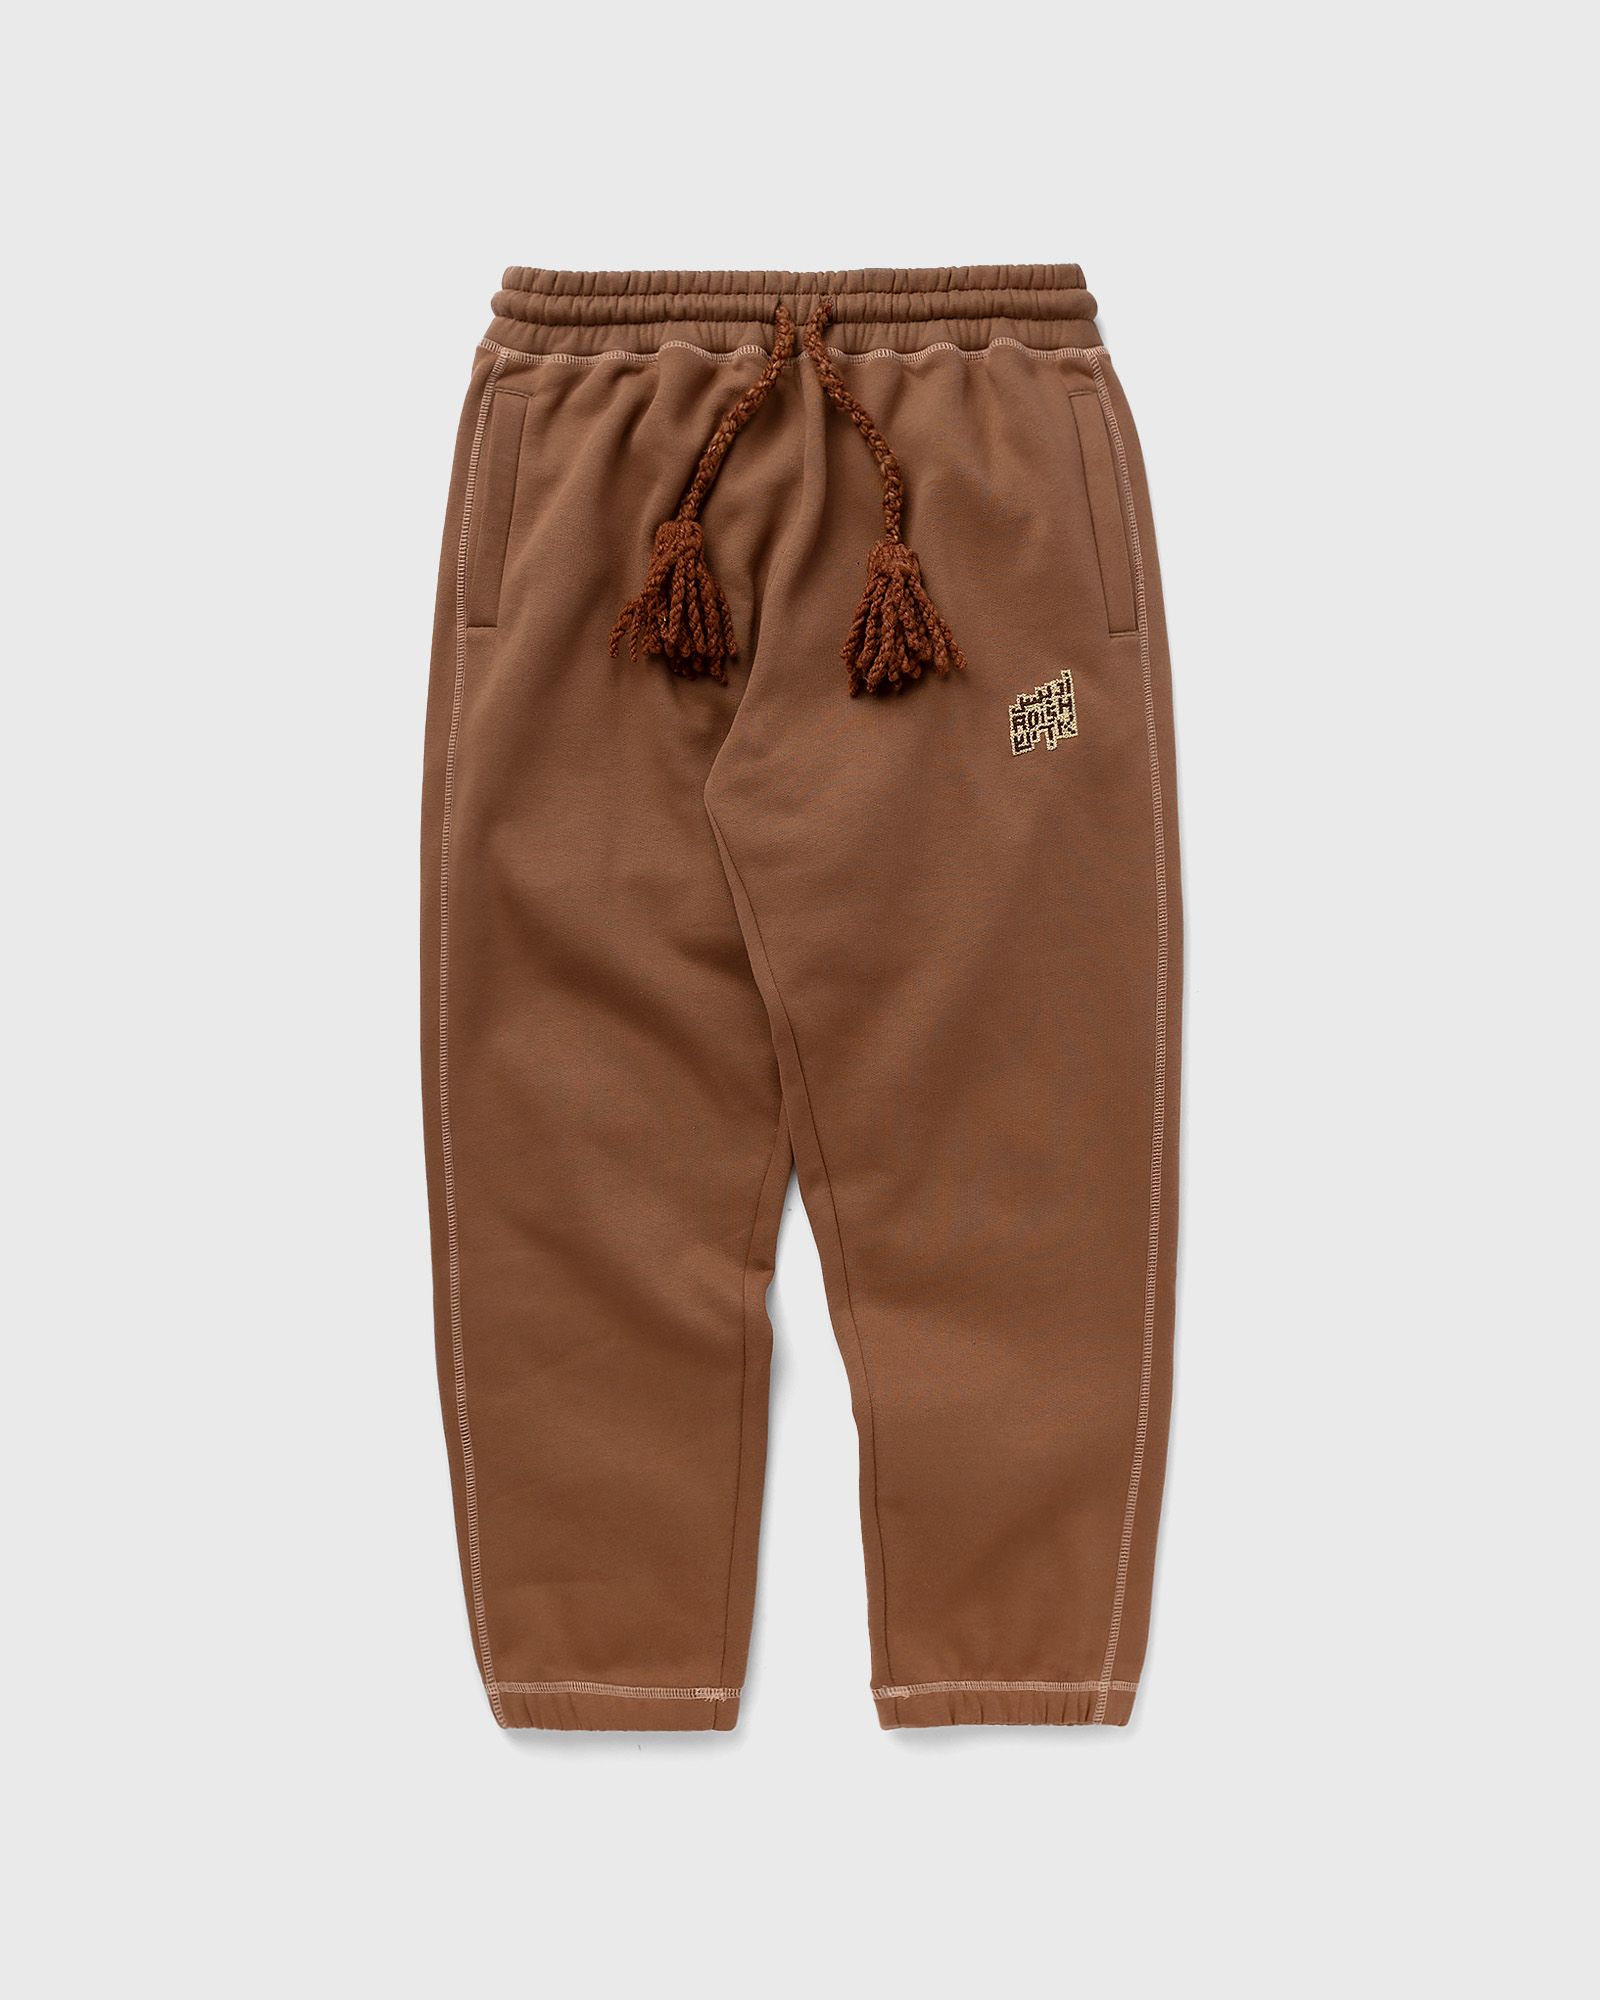 ADISH - tatreez logo contrast stitched lakiya sweatpants men sweatpants brown in größe:l